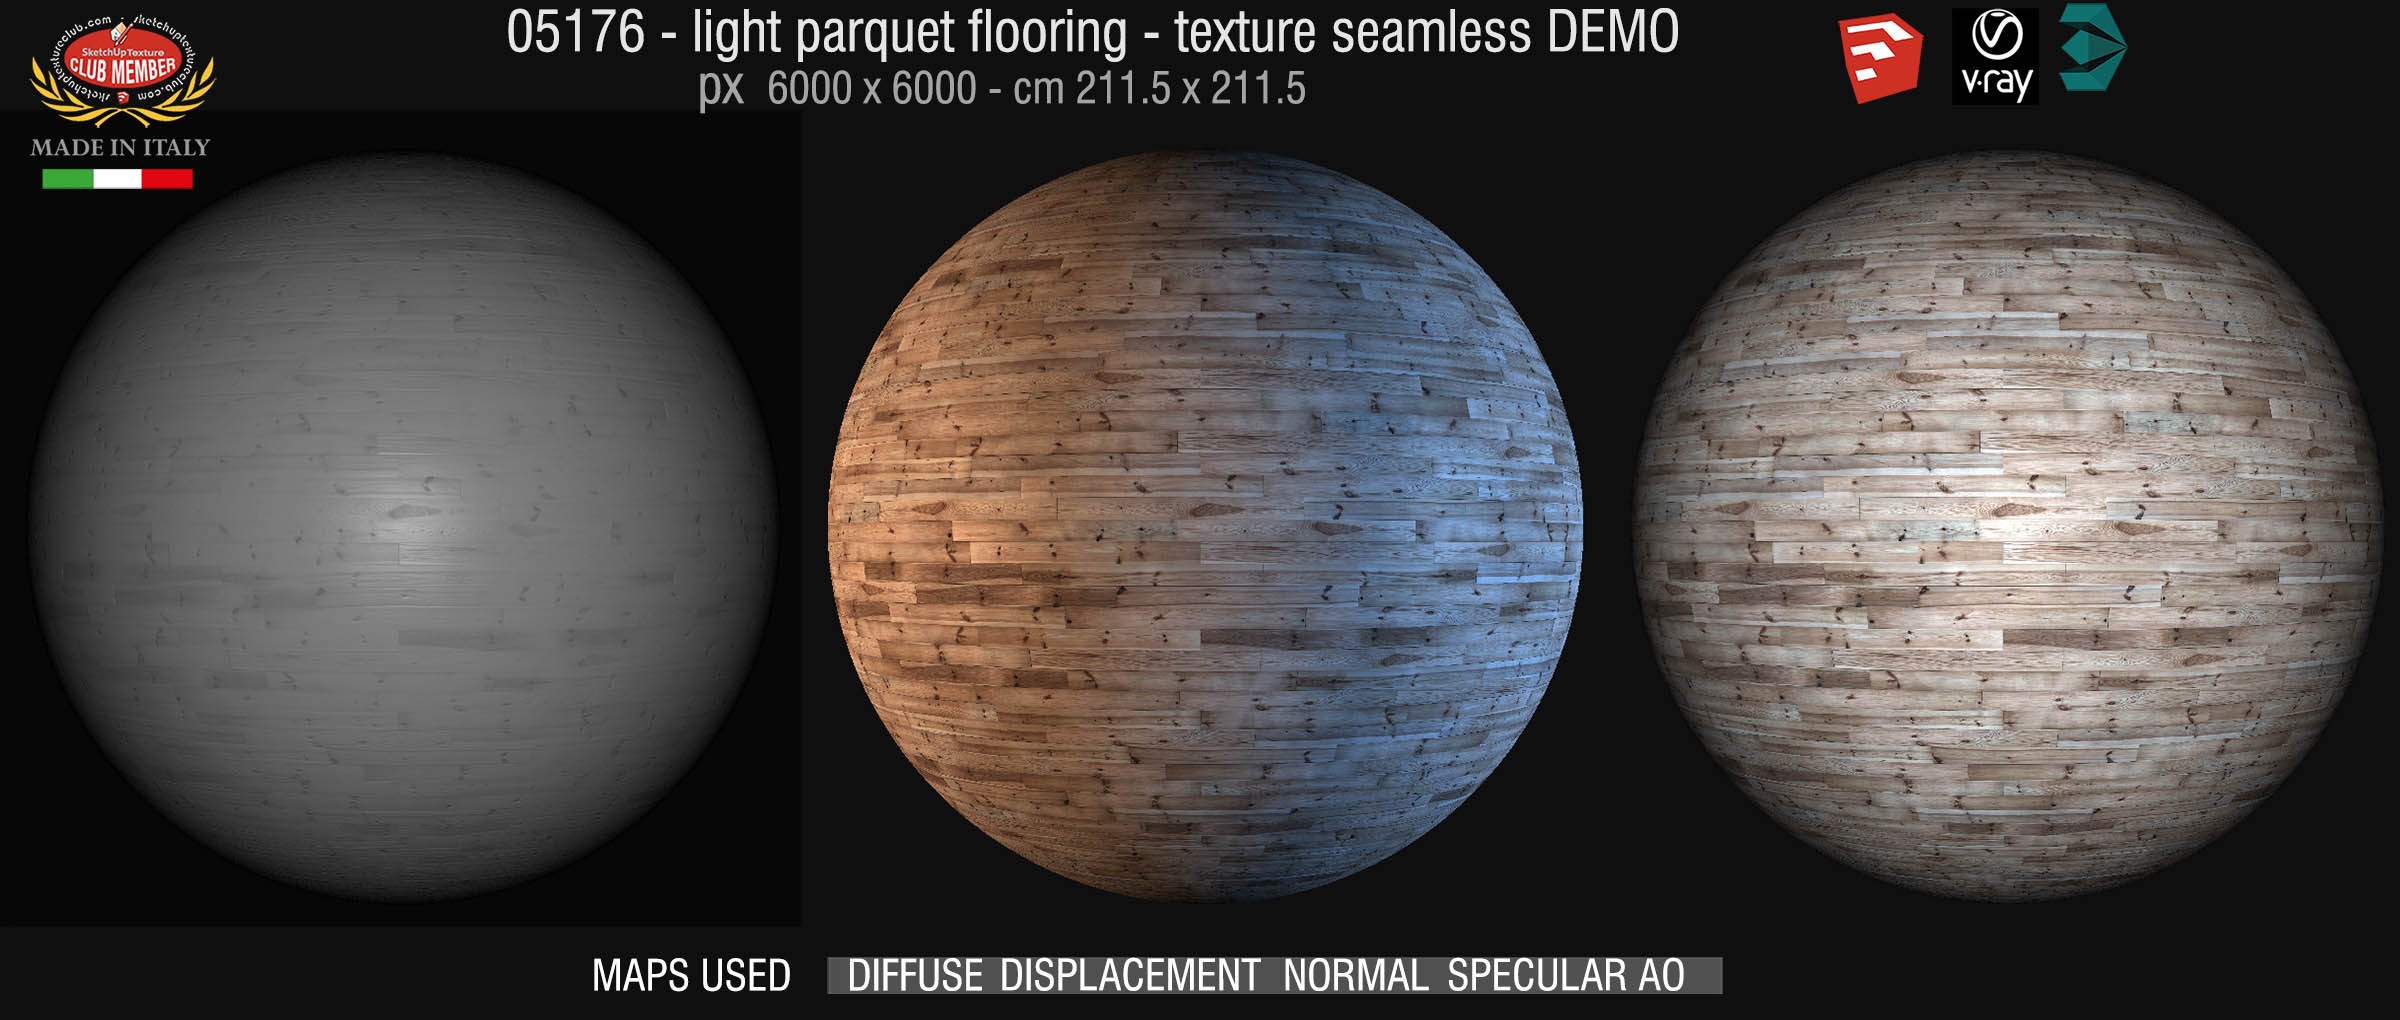 05176 HR Light parquet texture seamless + maps DEMO